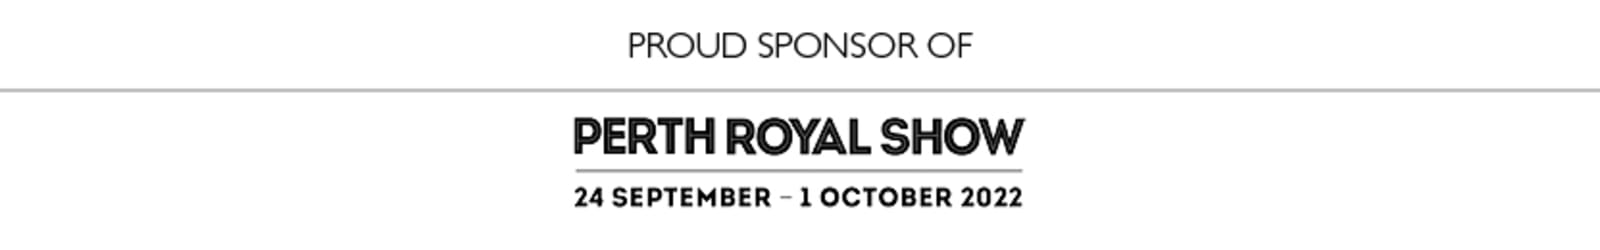 Proud Sponsor of Perth Royal Show - 24 September - 1 October 2022